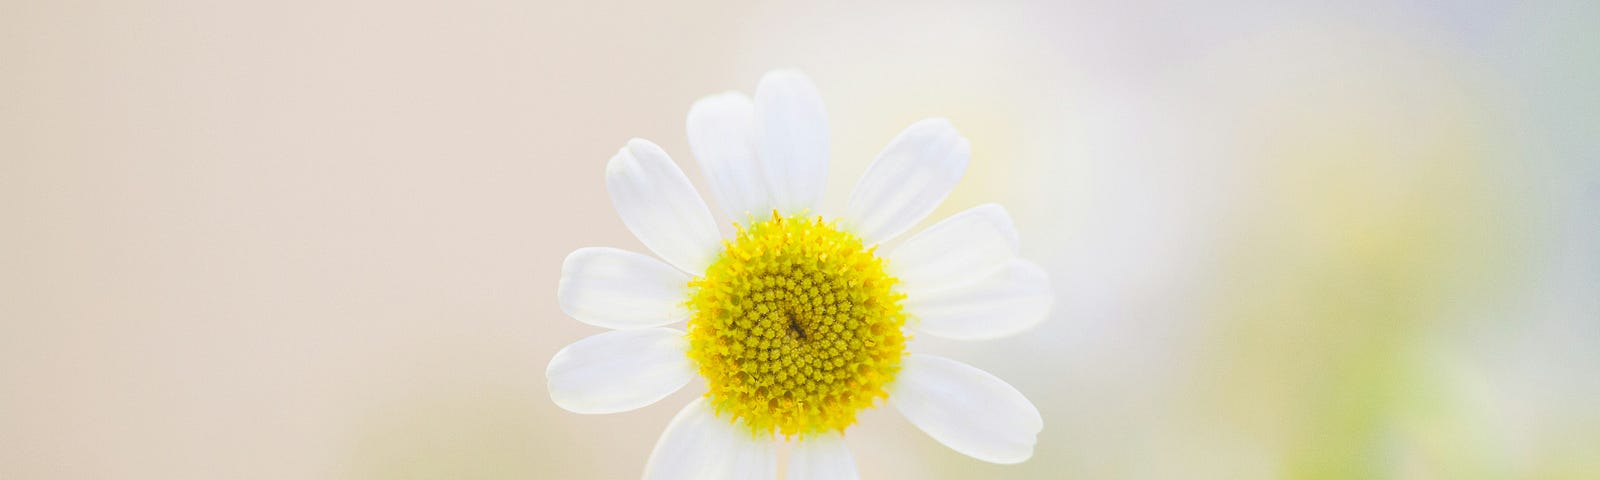 White daisy flower in bloom.